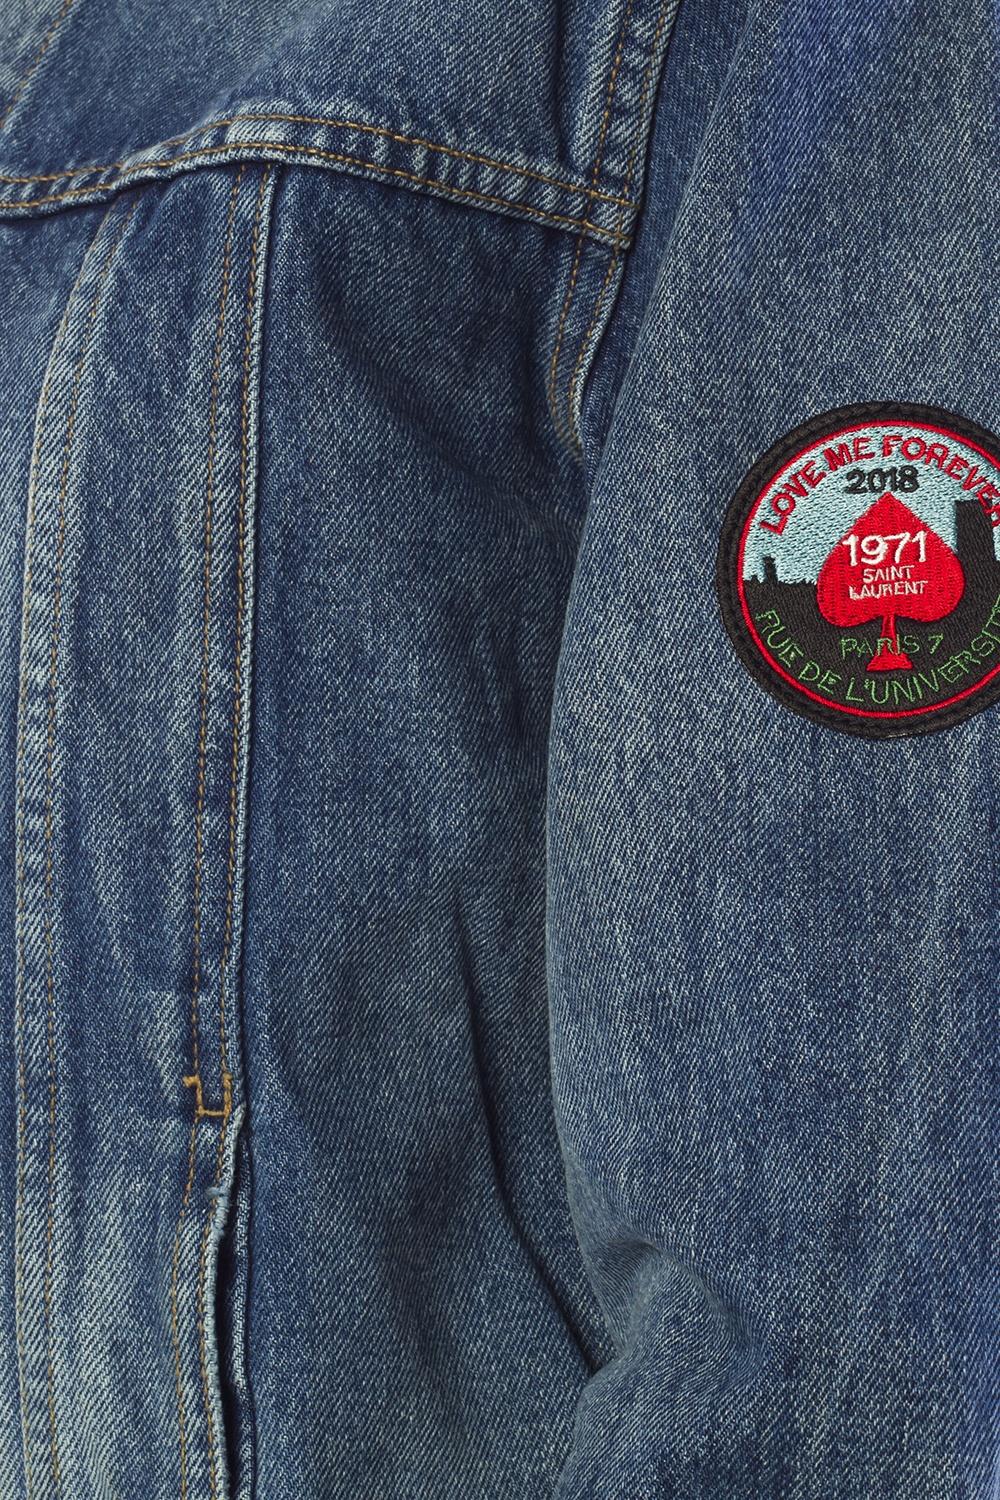 Saint Laurent Blue Jean Denim Jacket with Embroidered Badge Size Medium For Sale 1